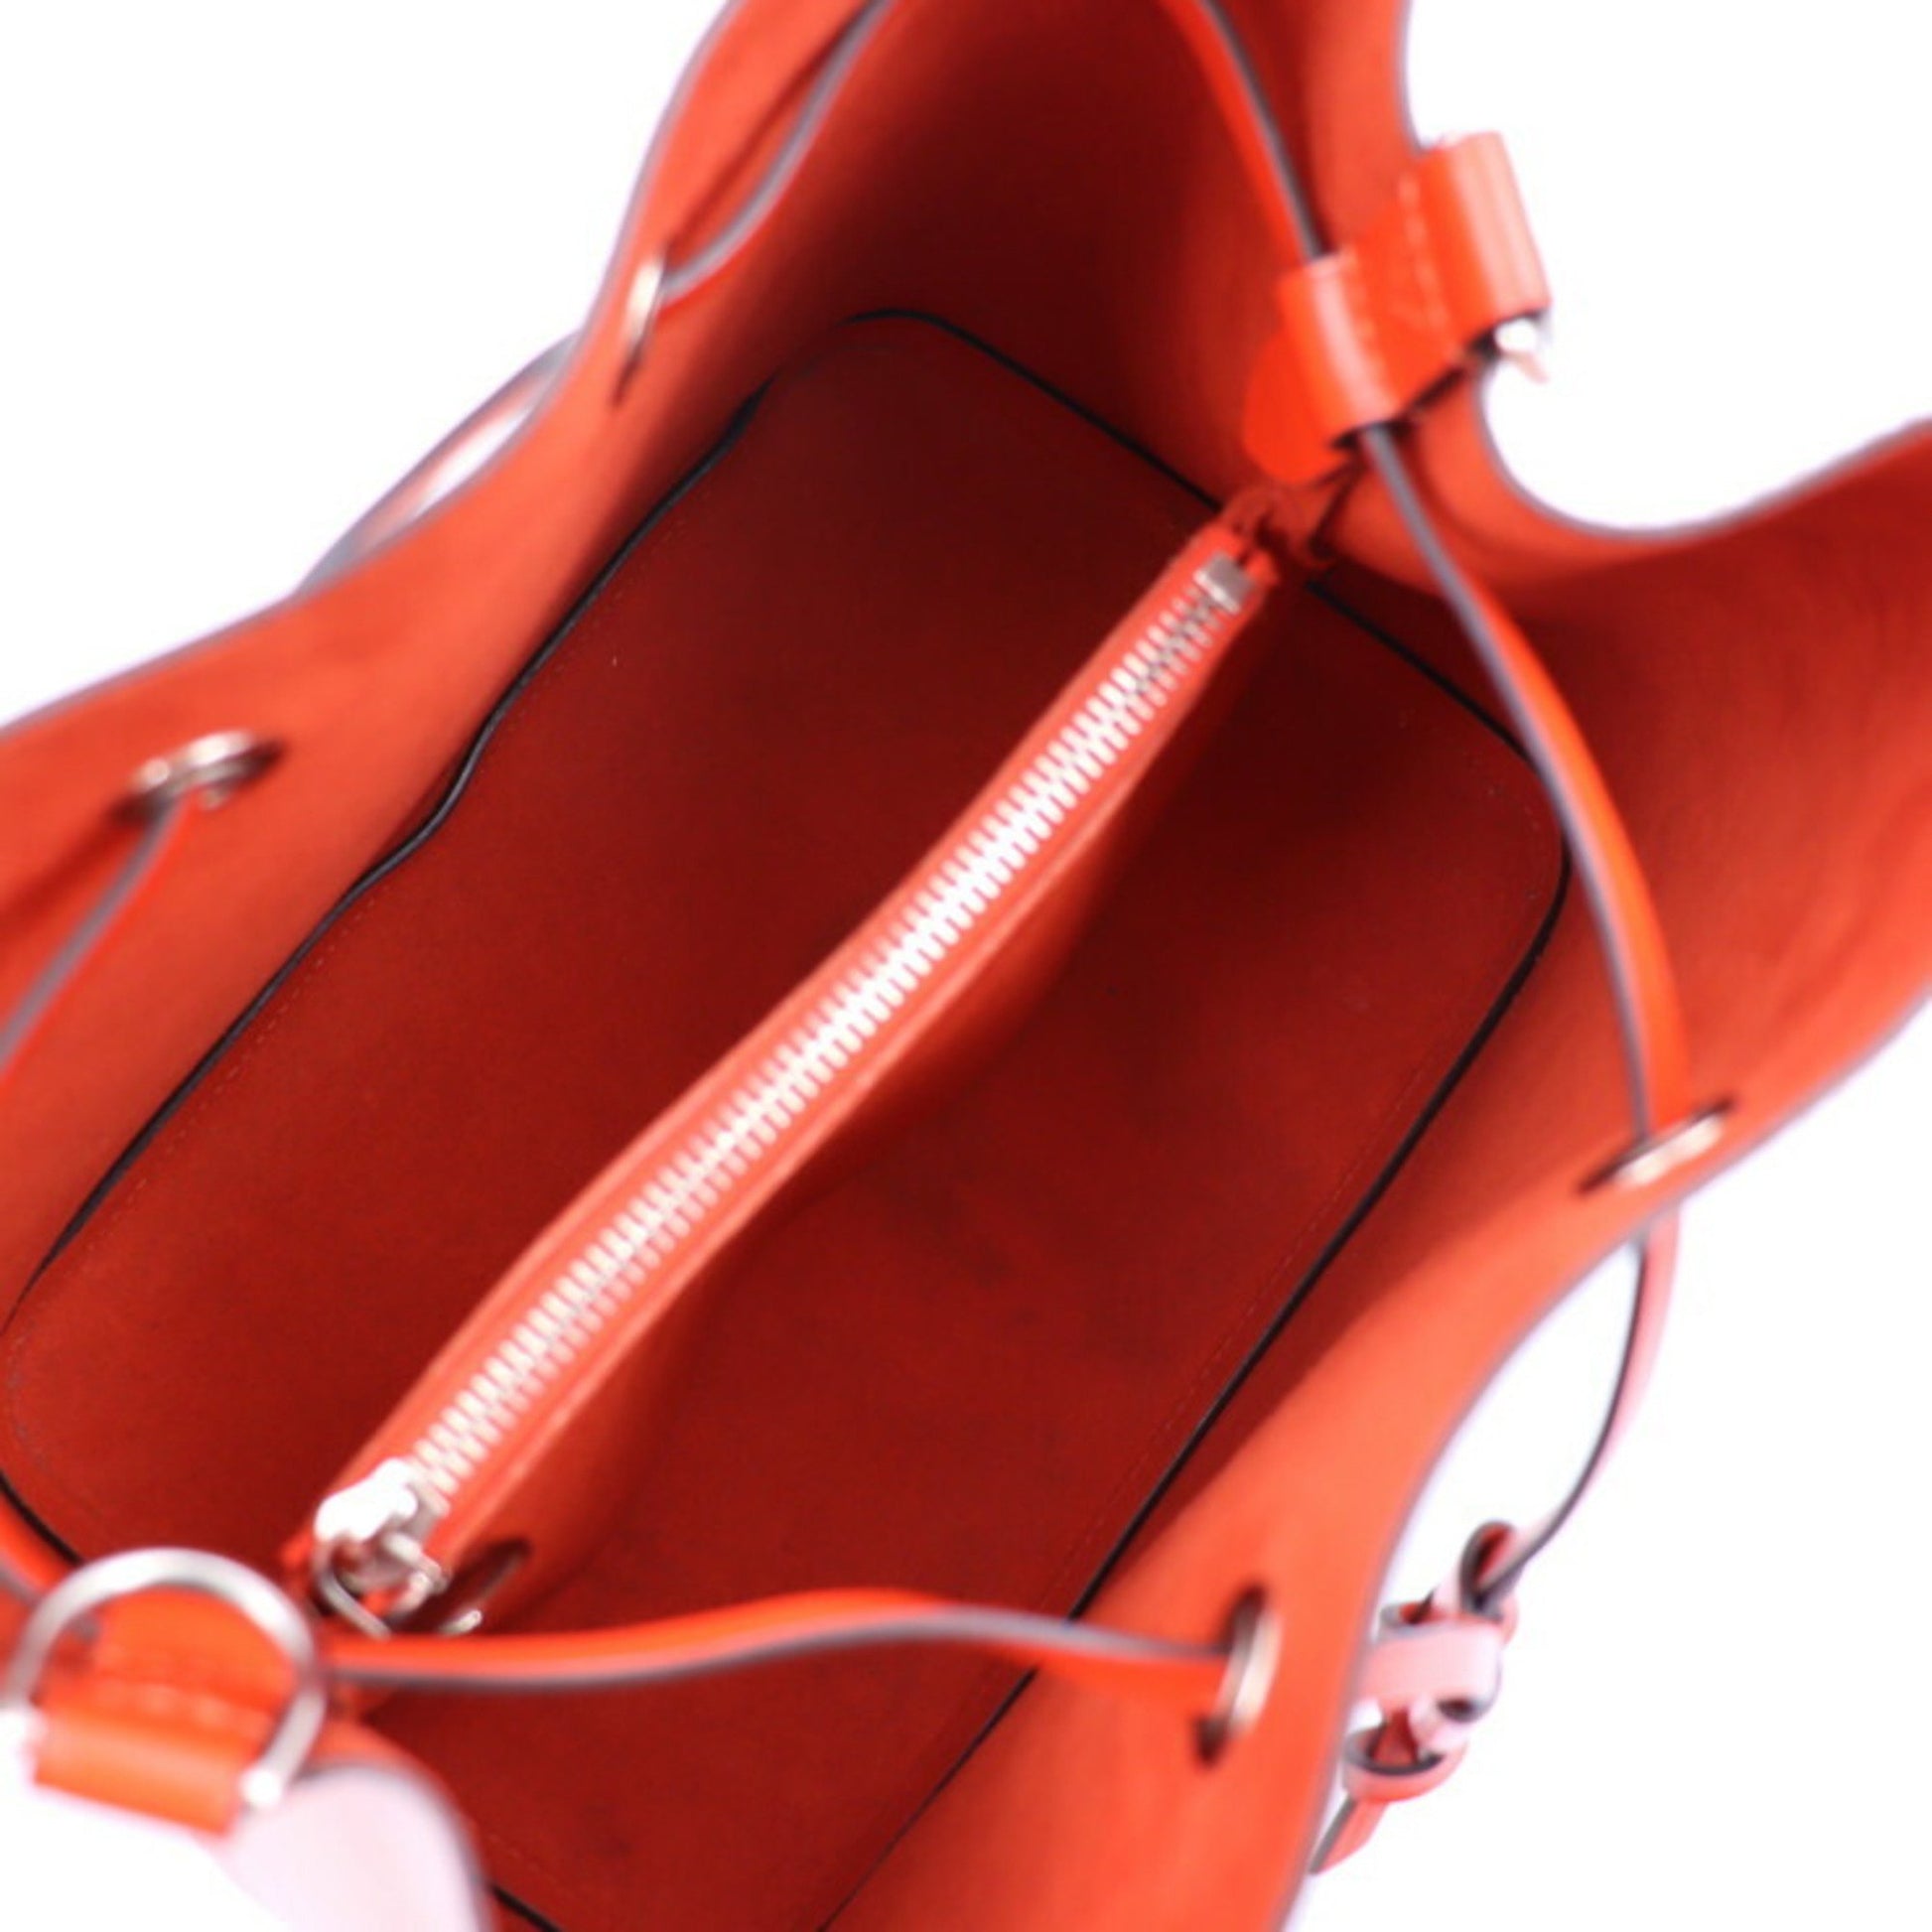 LOUIS VUITTON Neonoe Handbag M54370 Epi Leather Calf Rose